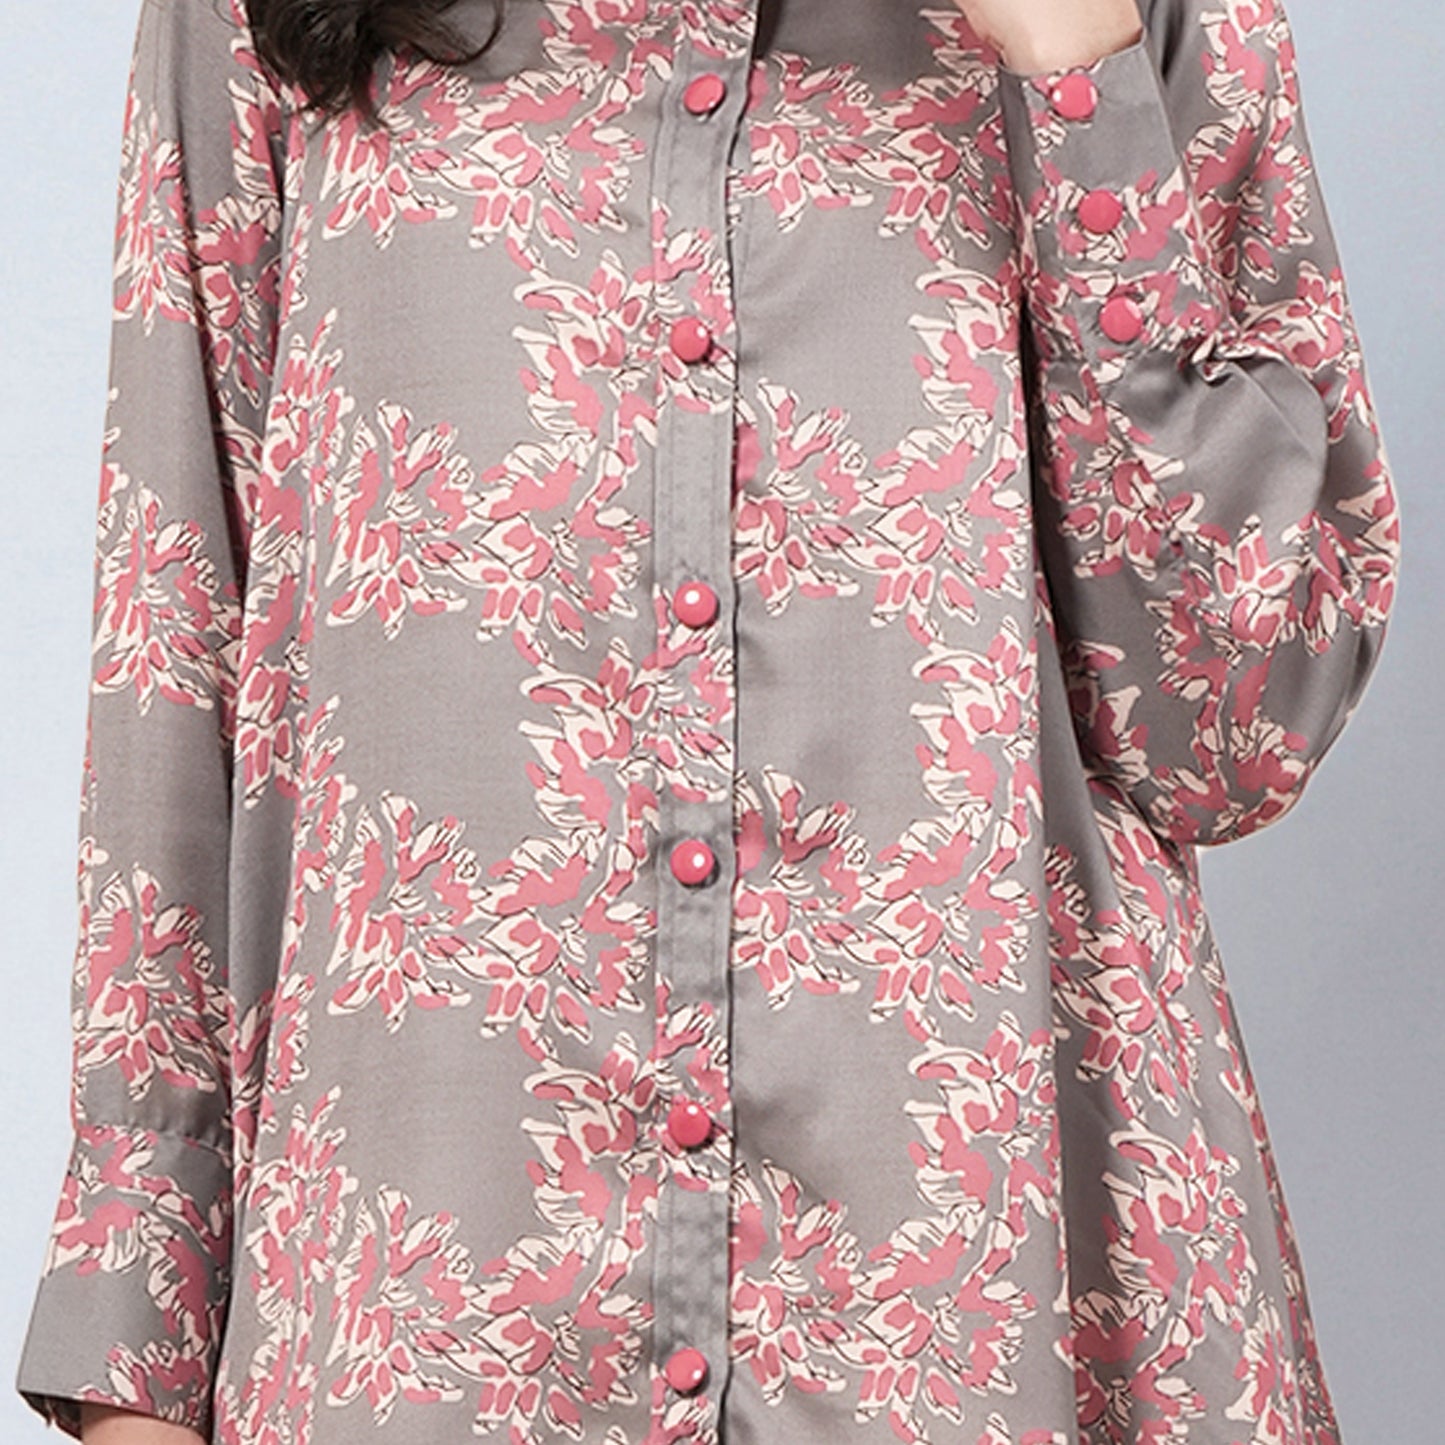 Grey and Pink Floral Hi-Low Dress